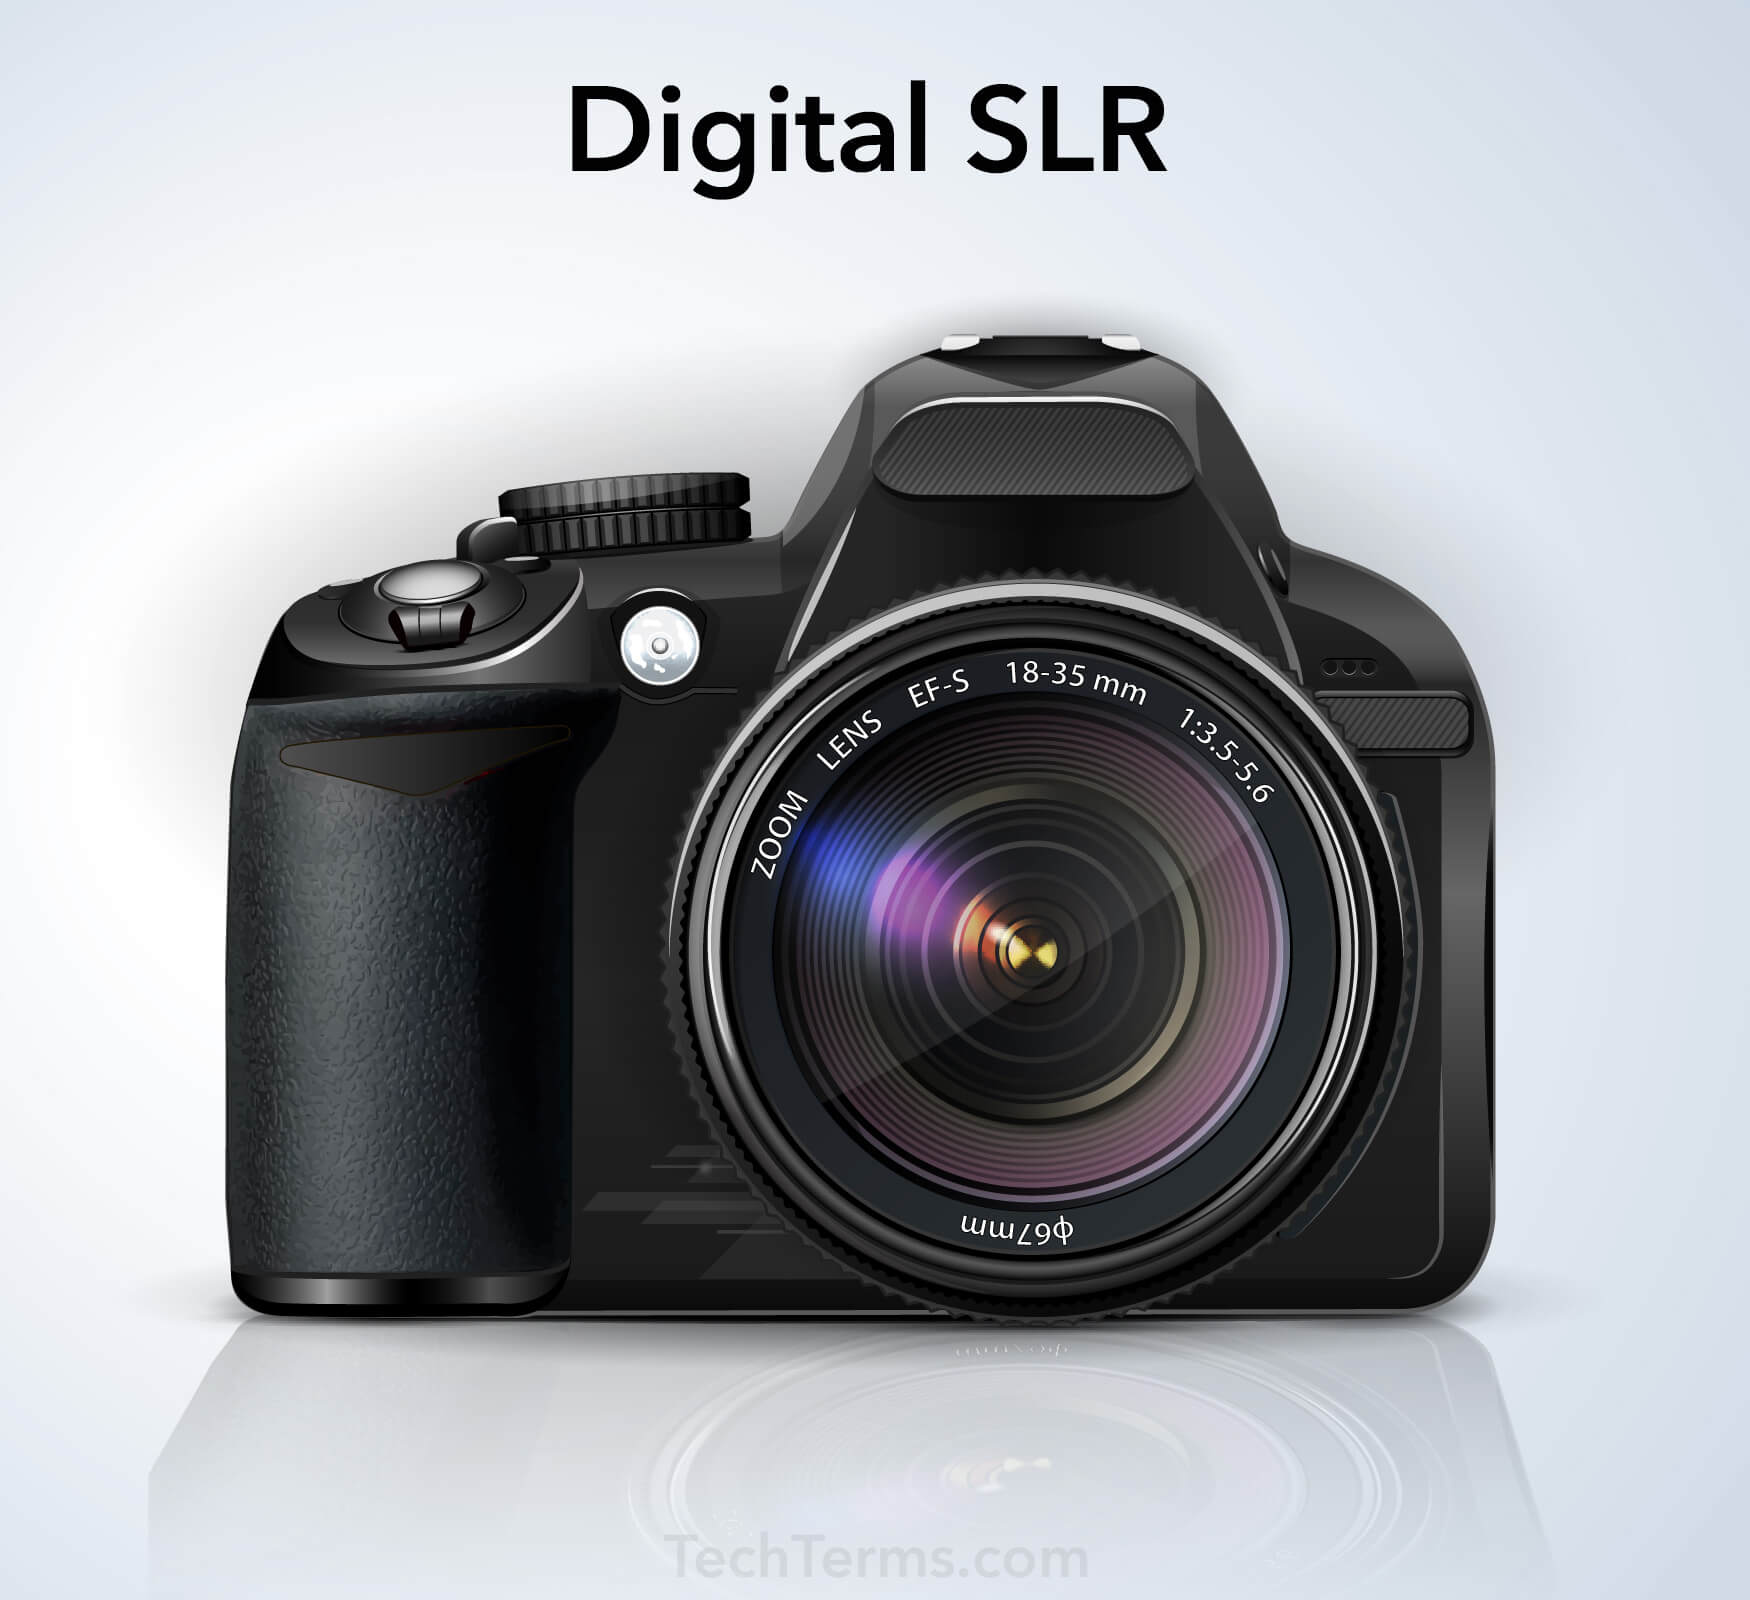 Digital Camera Definition - What is a digital camera?